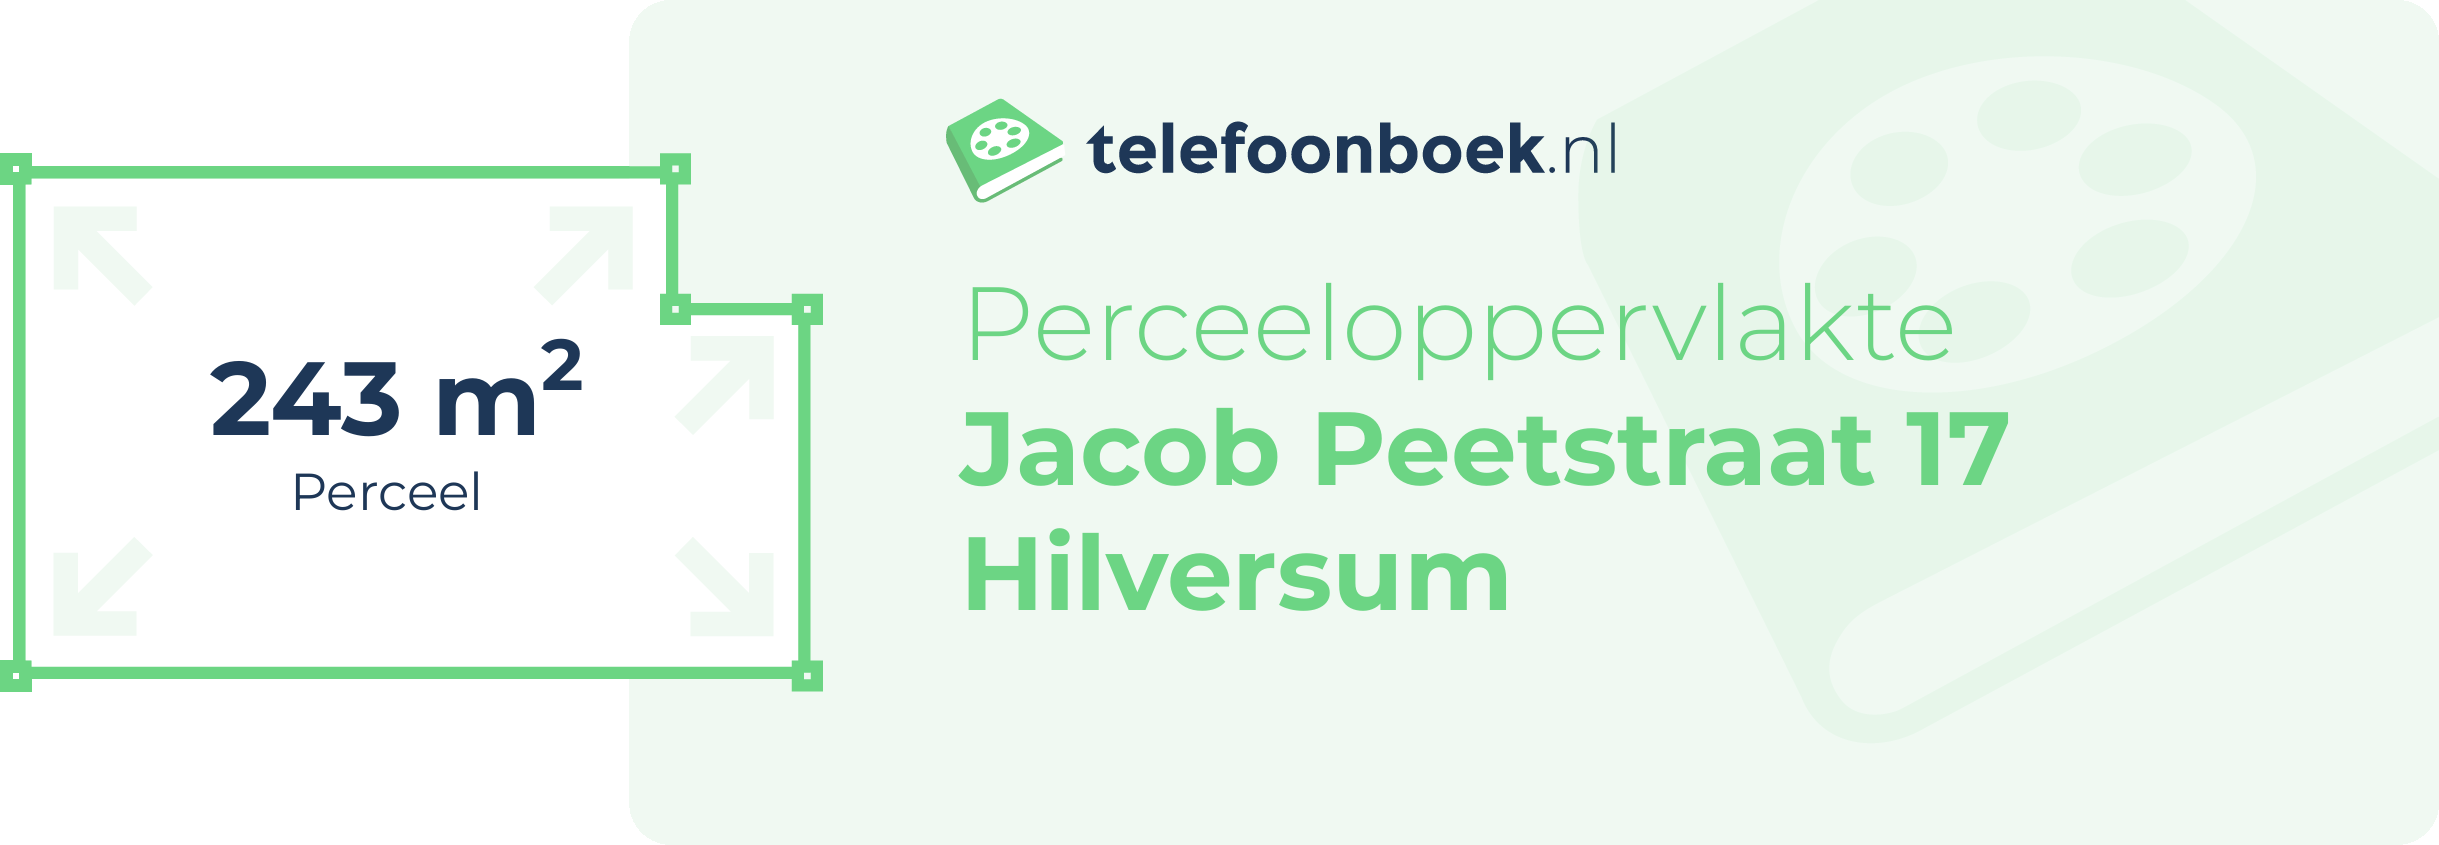 Perceeloppervlakte Jacob Peetstraat 17 Hilversum